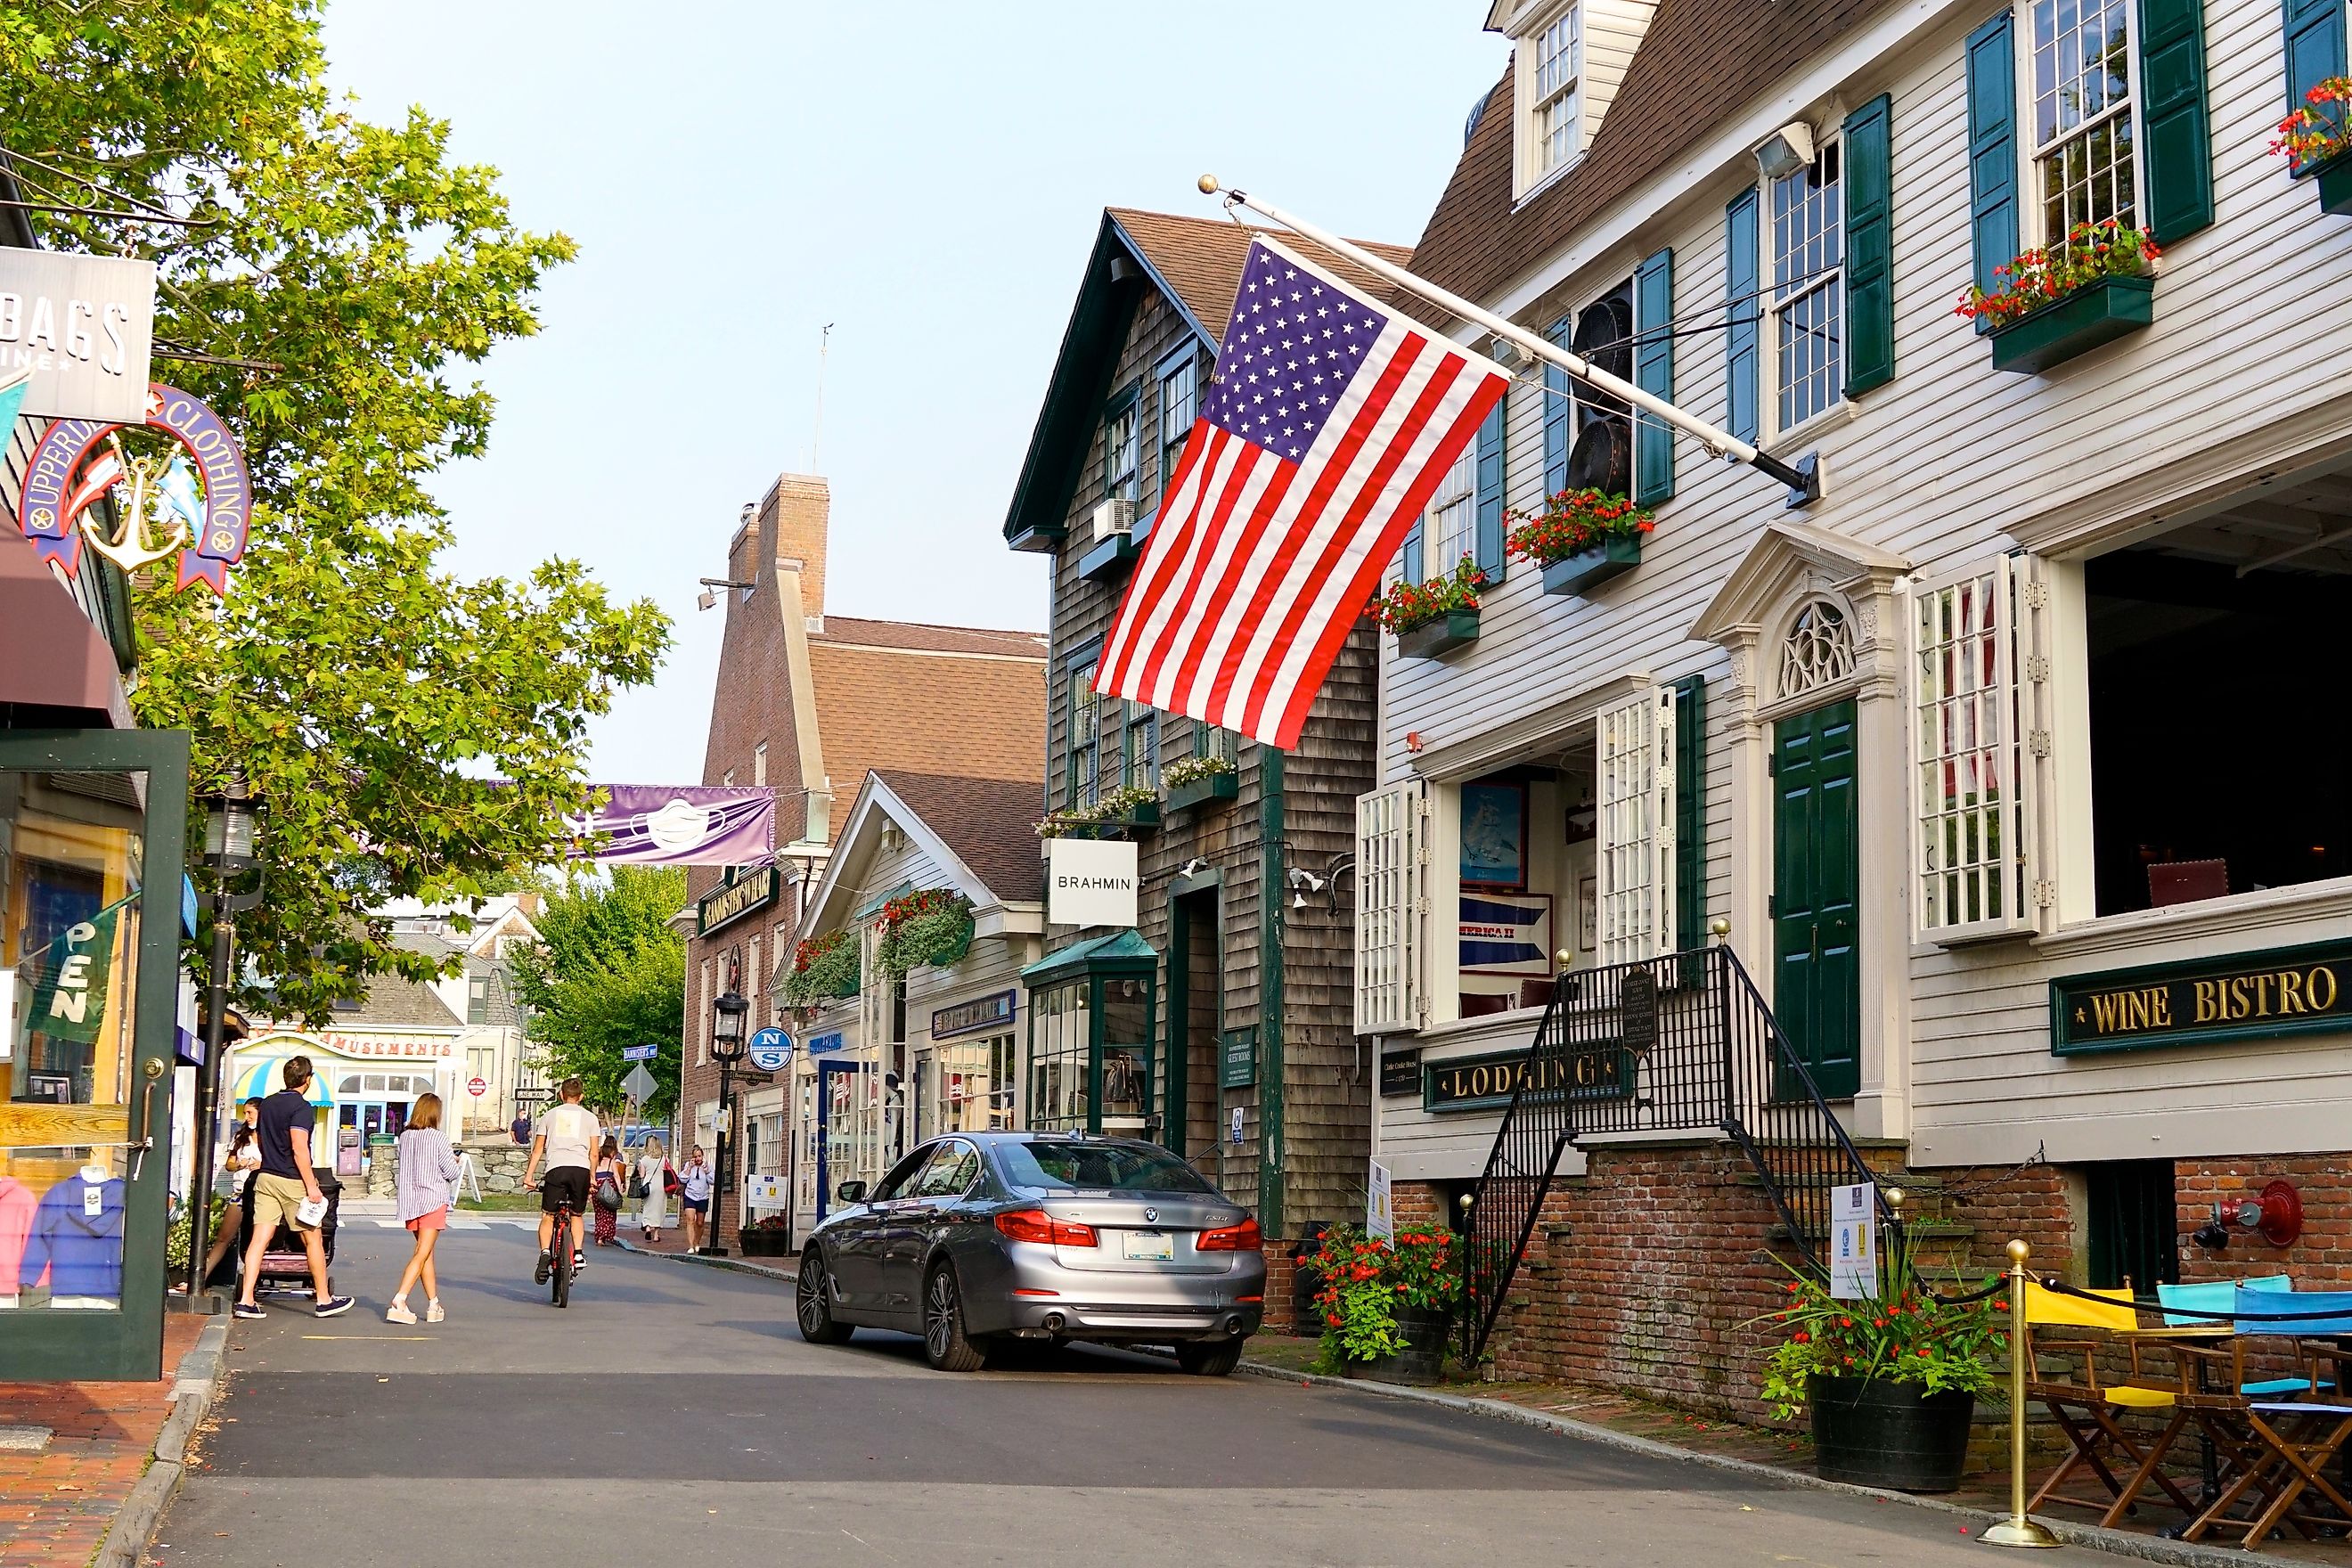 Thames Street, Newport, Rhode Island, USA. Editorial credit: George Wirt / Shutterstock.com